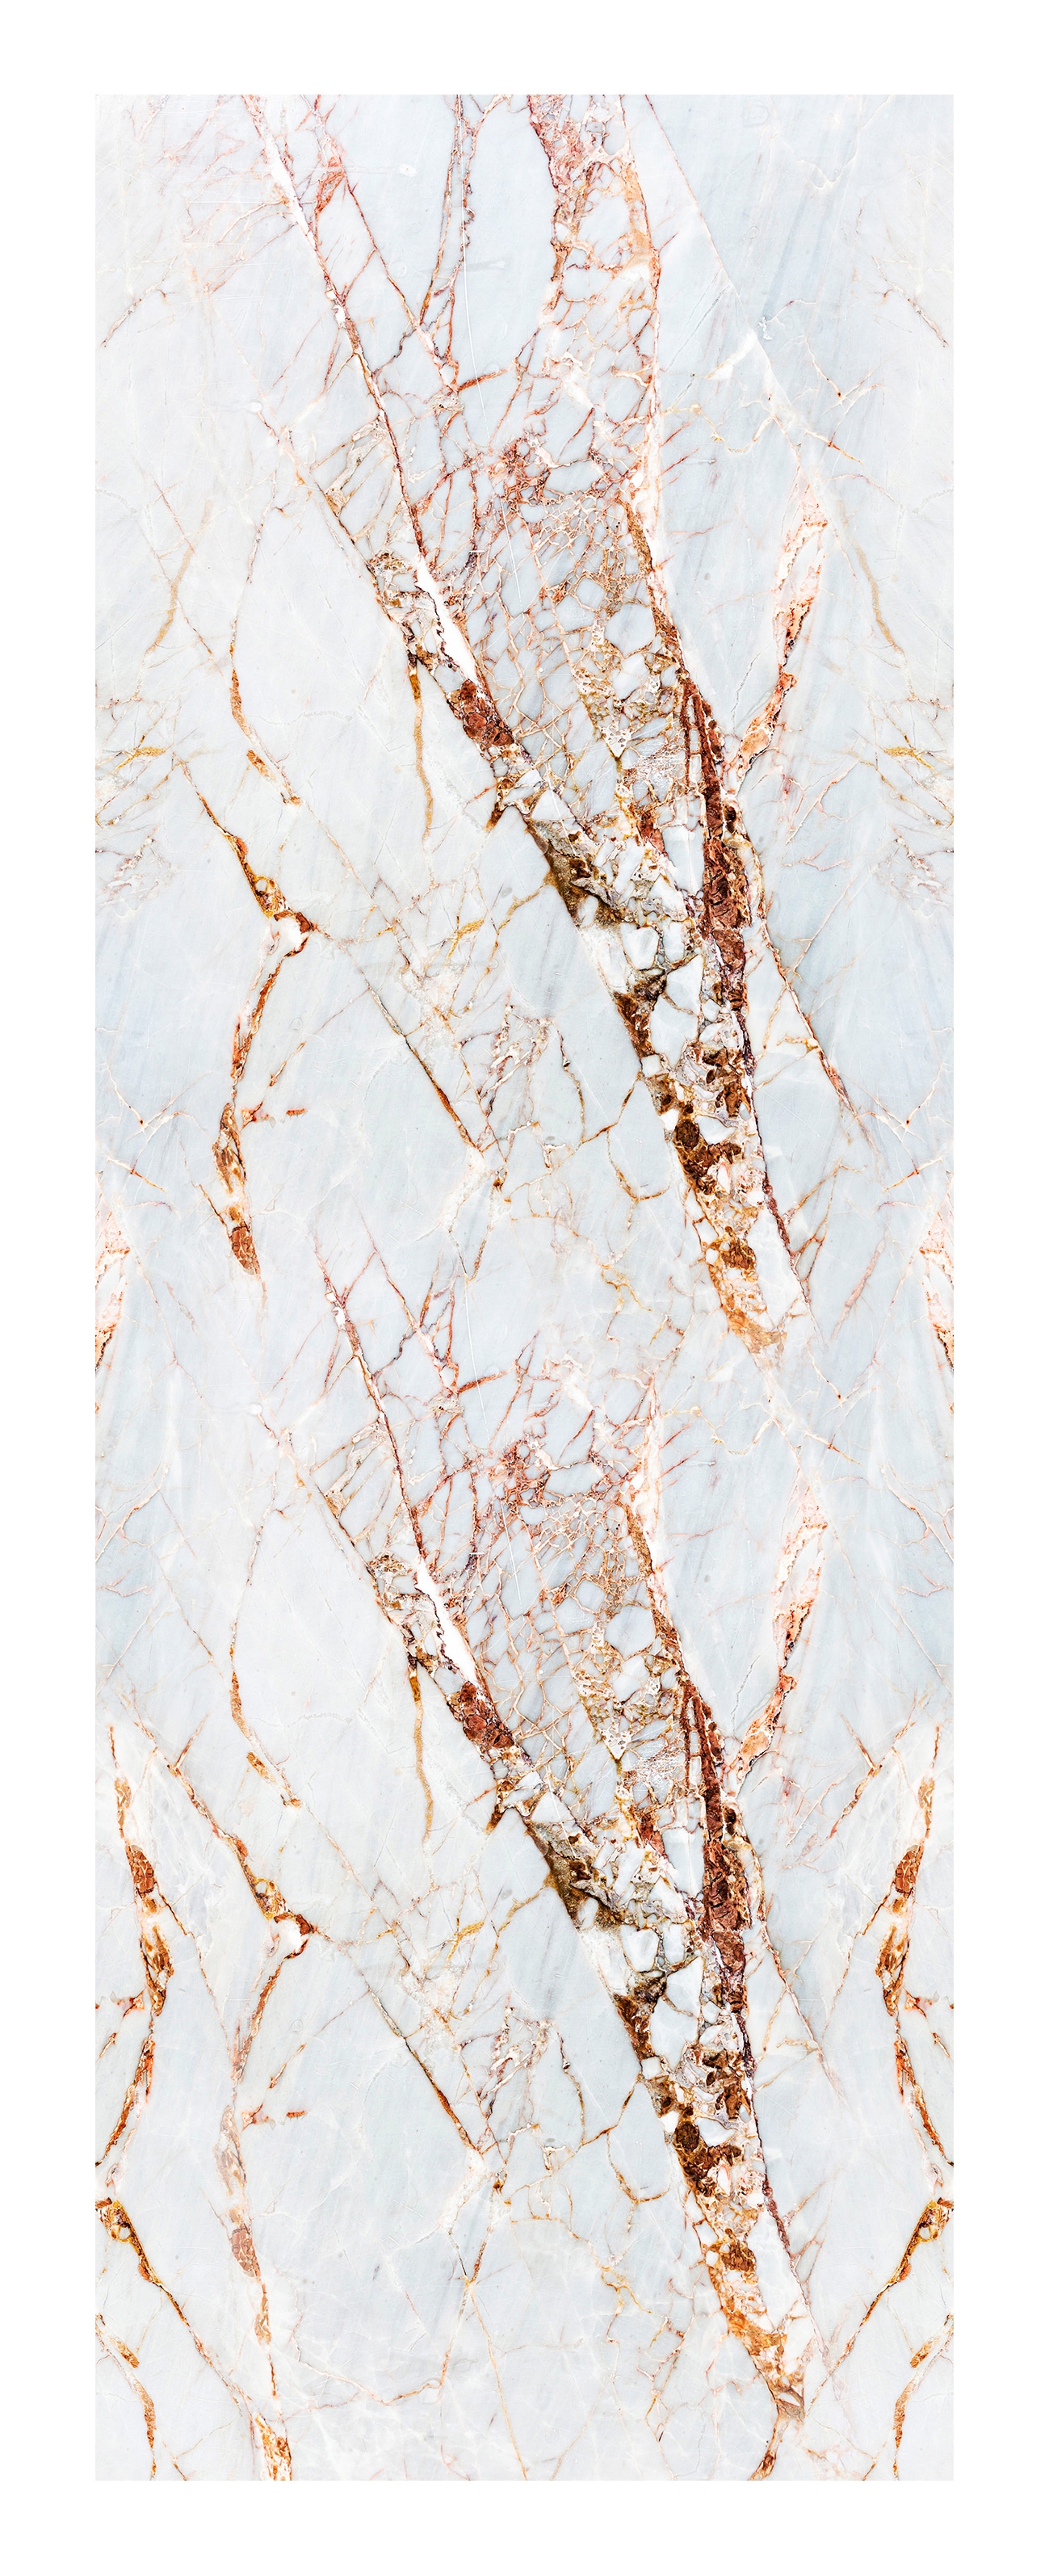 Vinyltapete »Marmor-Weiss«, Steinoptik, 90 x 250 cm, selbstklebend